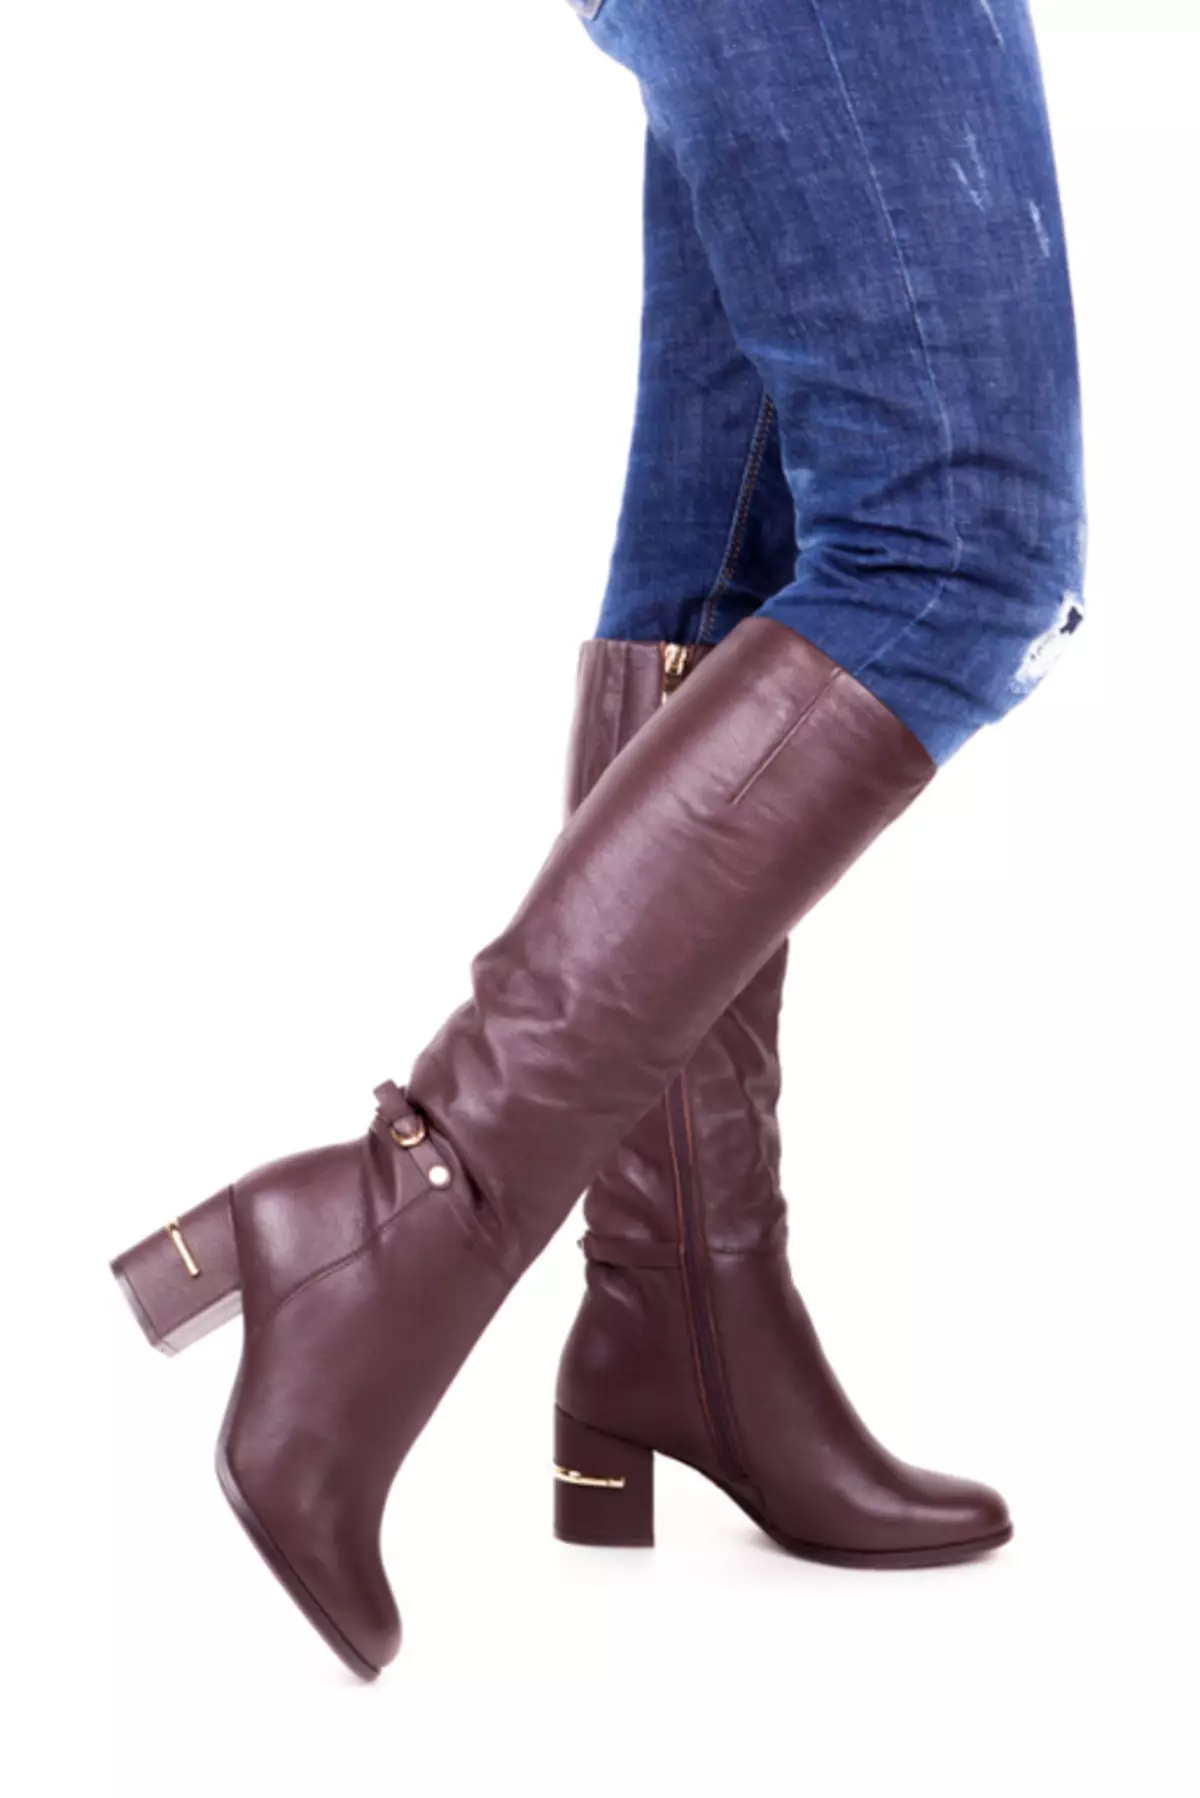 Grapa Boots (hotuna 39): model na hunturu 2084_11